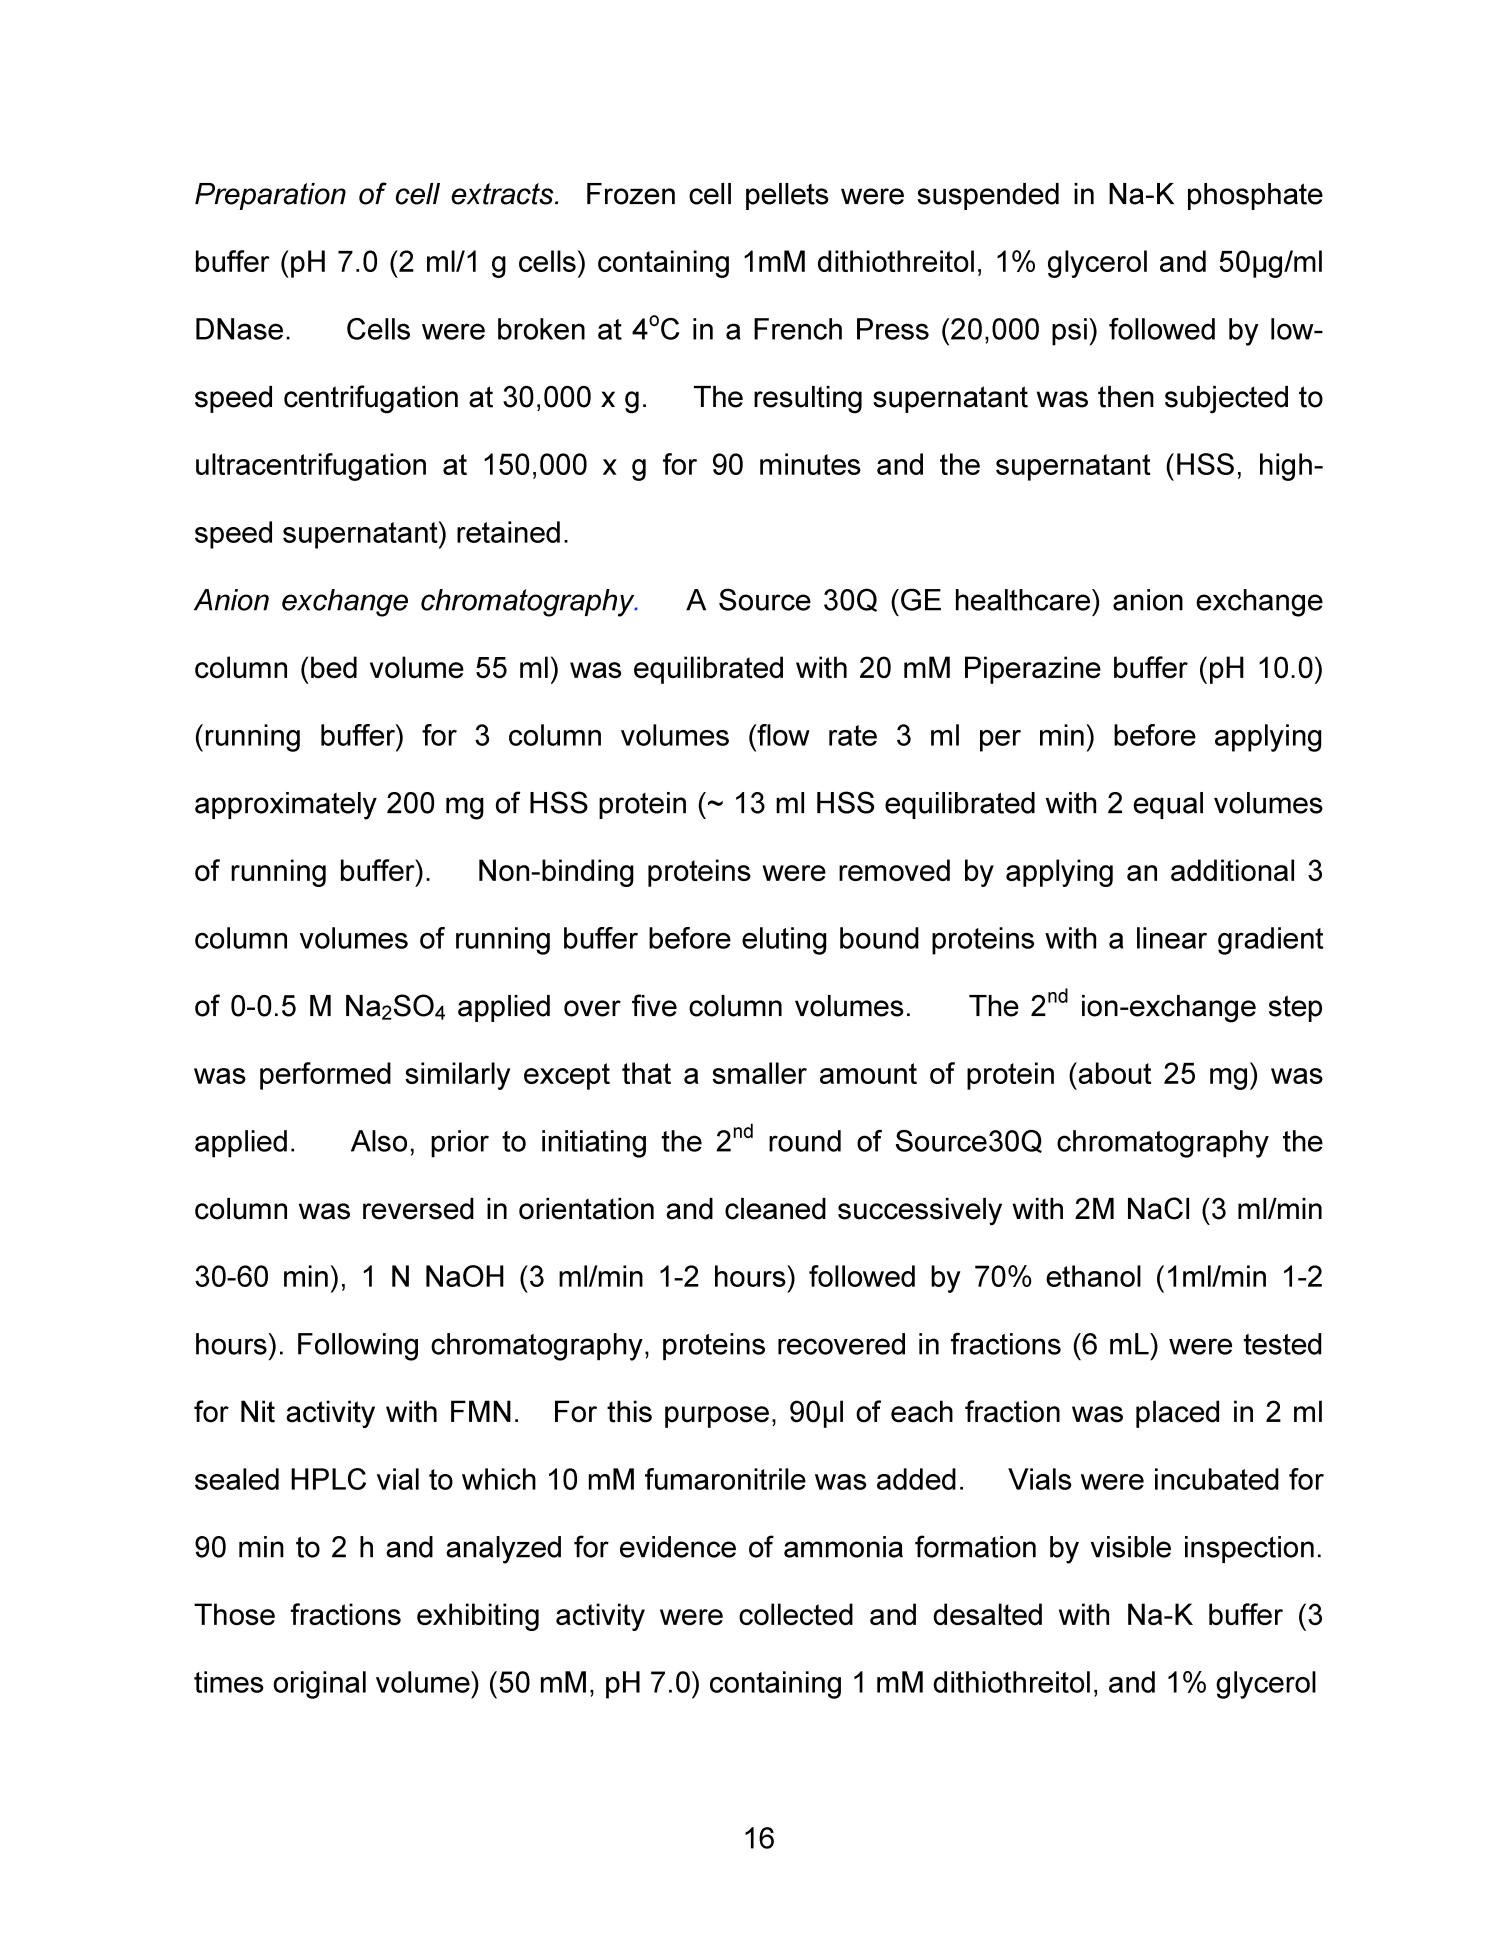 Purification of Cyanide-Degrading Nitrilase from Pseudomonas Fluorescens NCIMB 11764.
                                                
                                                    16
                                                